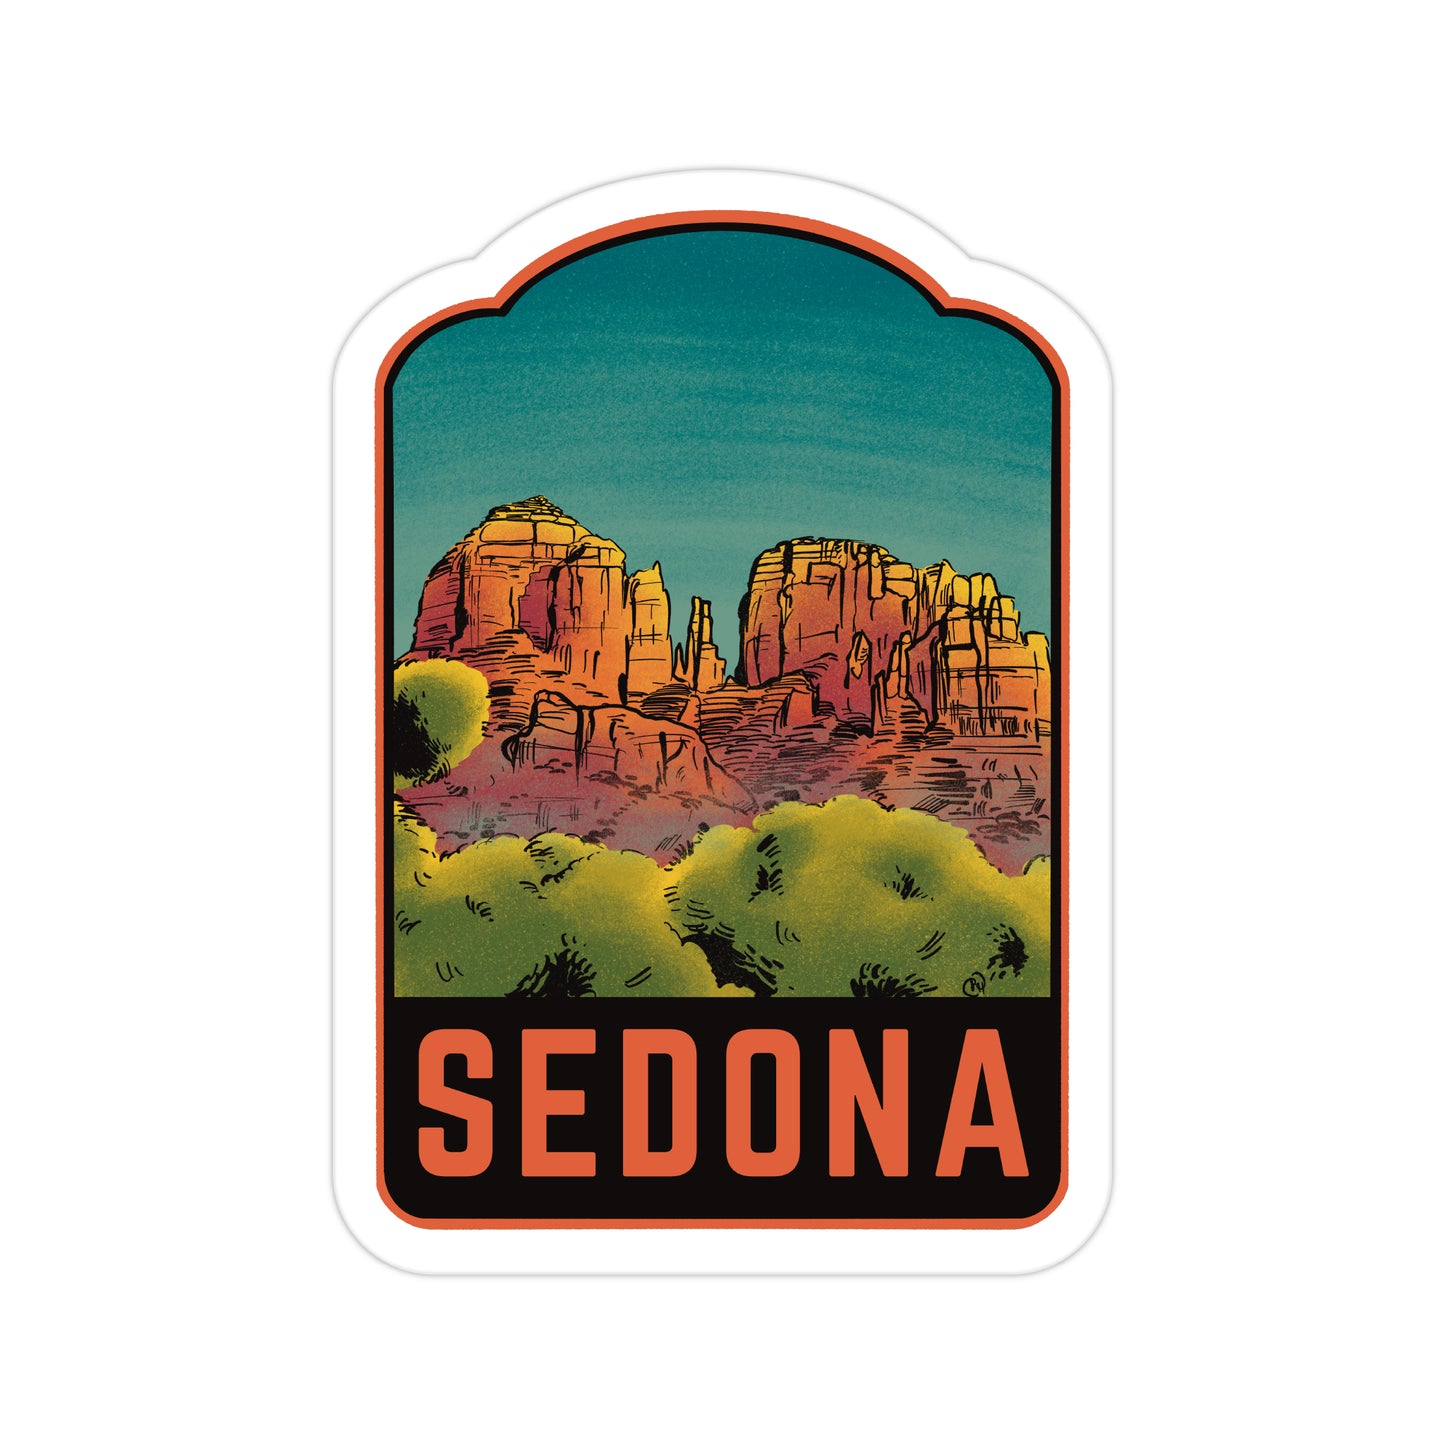 A sticker of Sedona Arizona